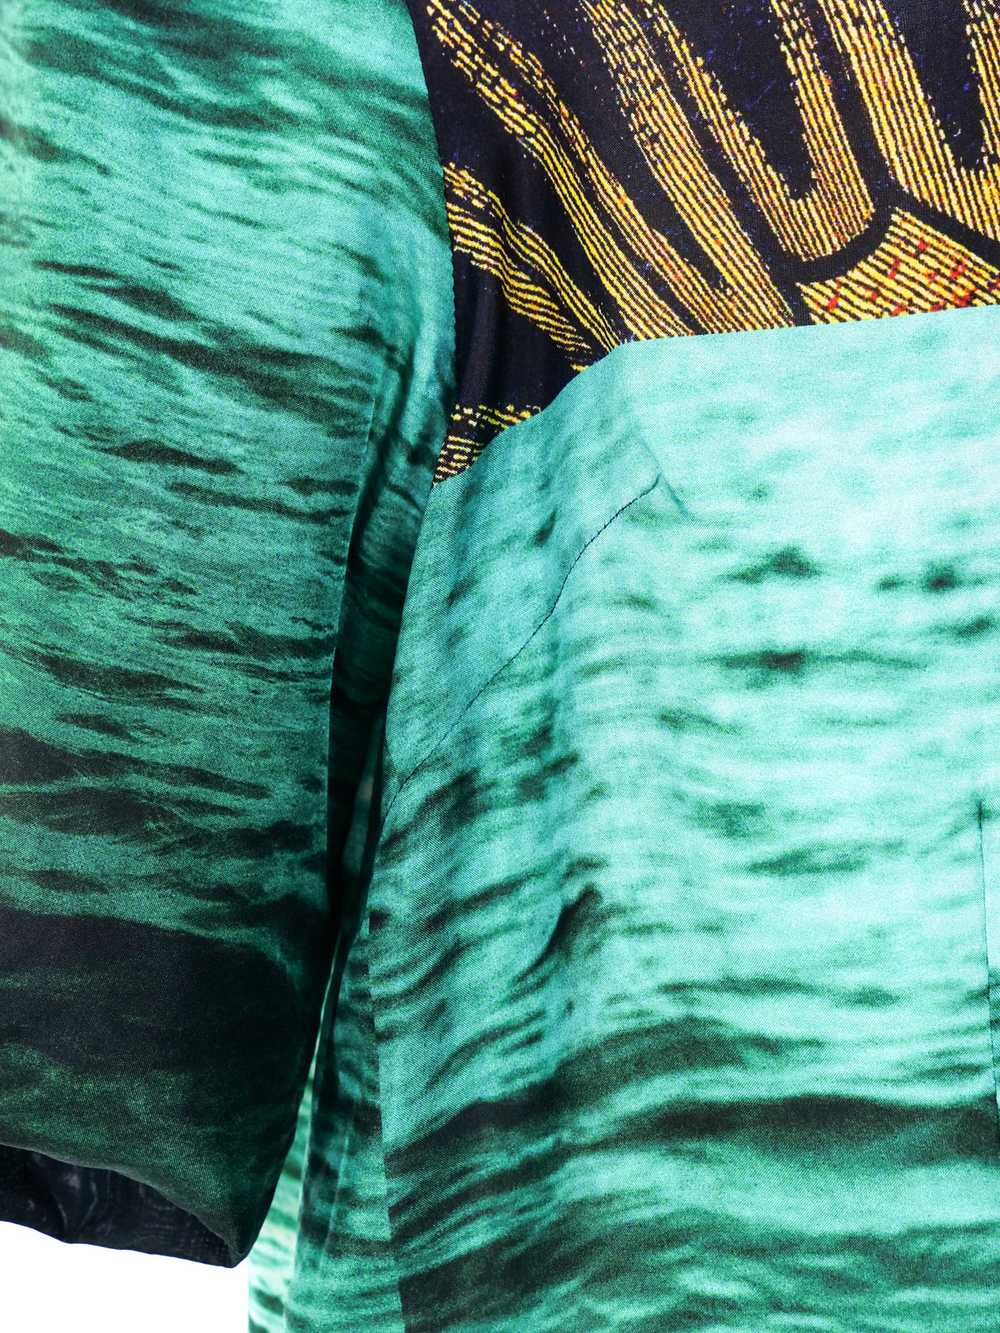 Dries Van Noten Water Motif Printed Shift Dress - image 5